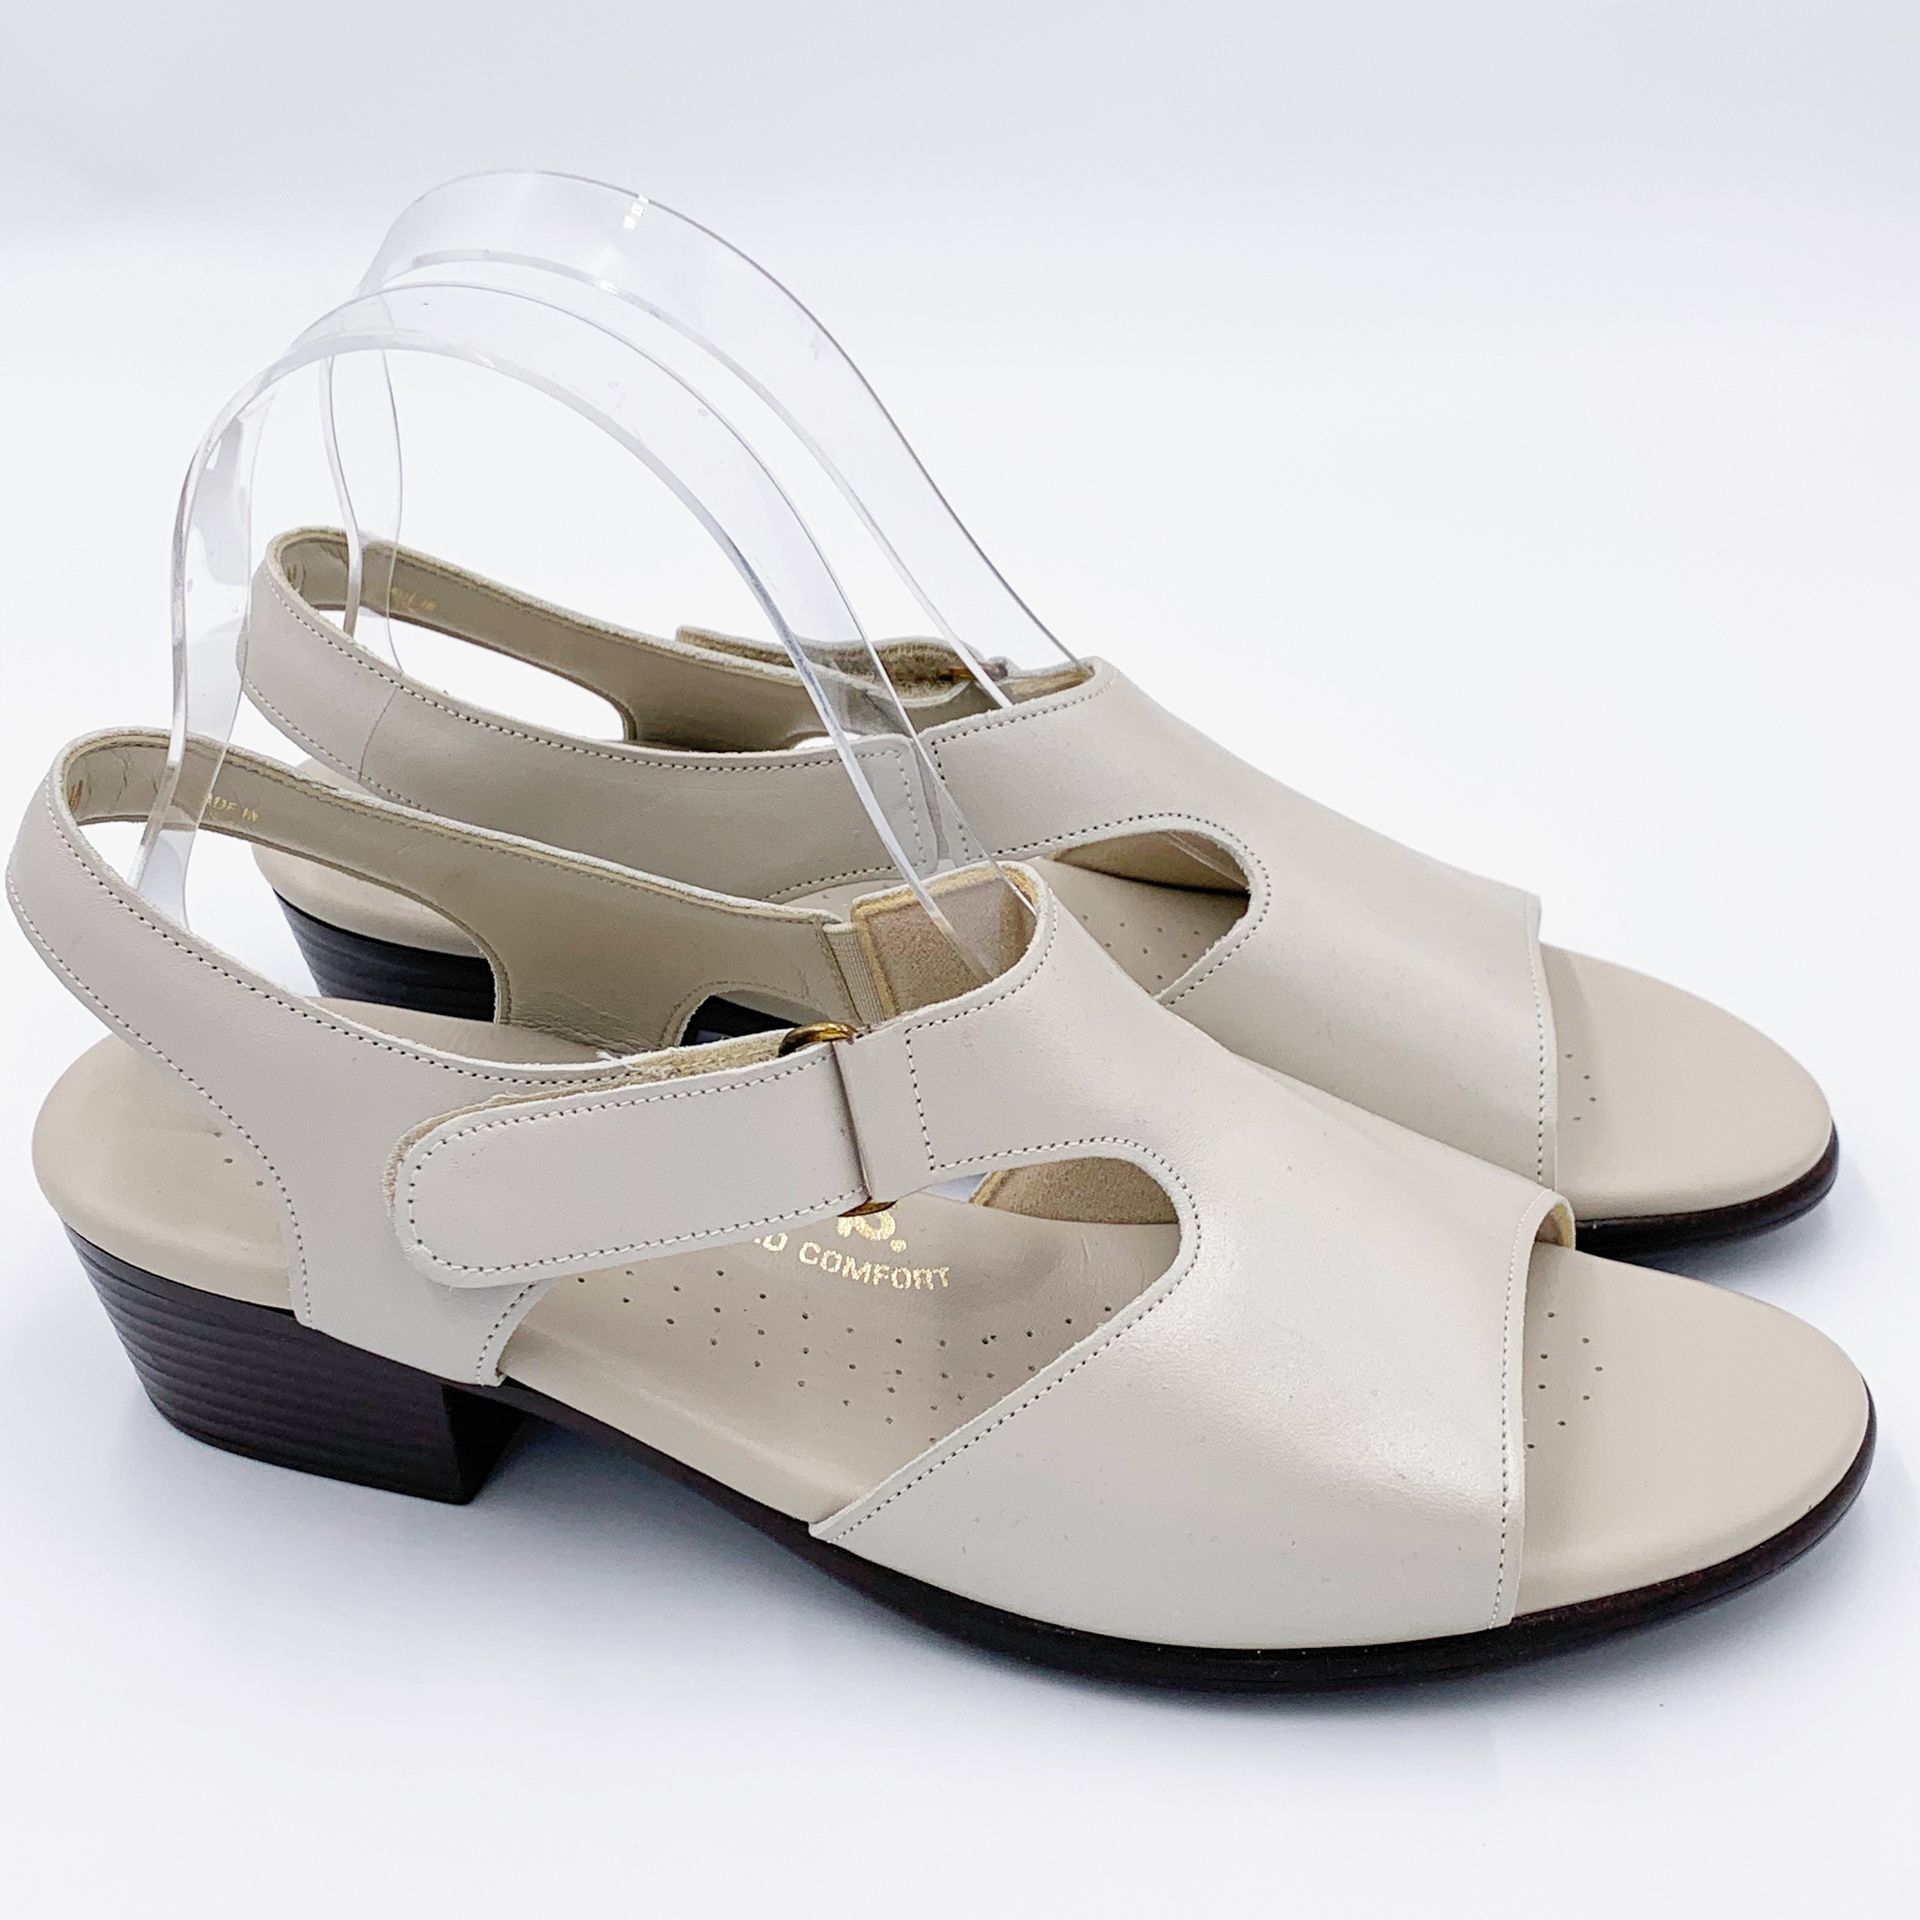 SAS Tripad Comfort Suntimer Shoes size 9